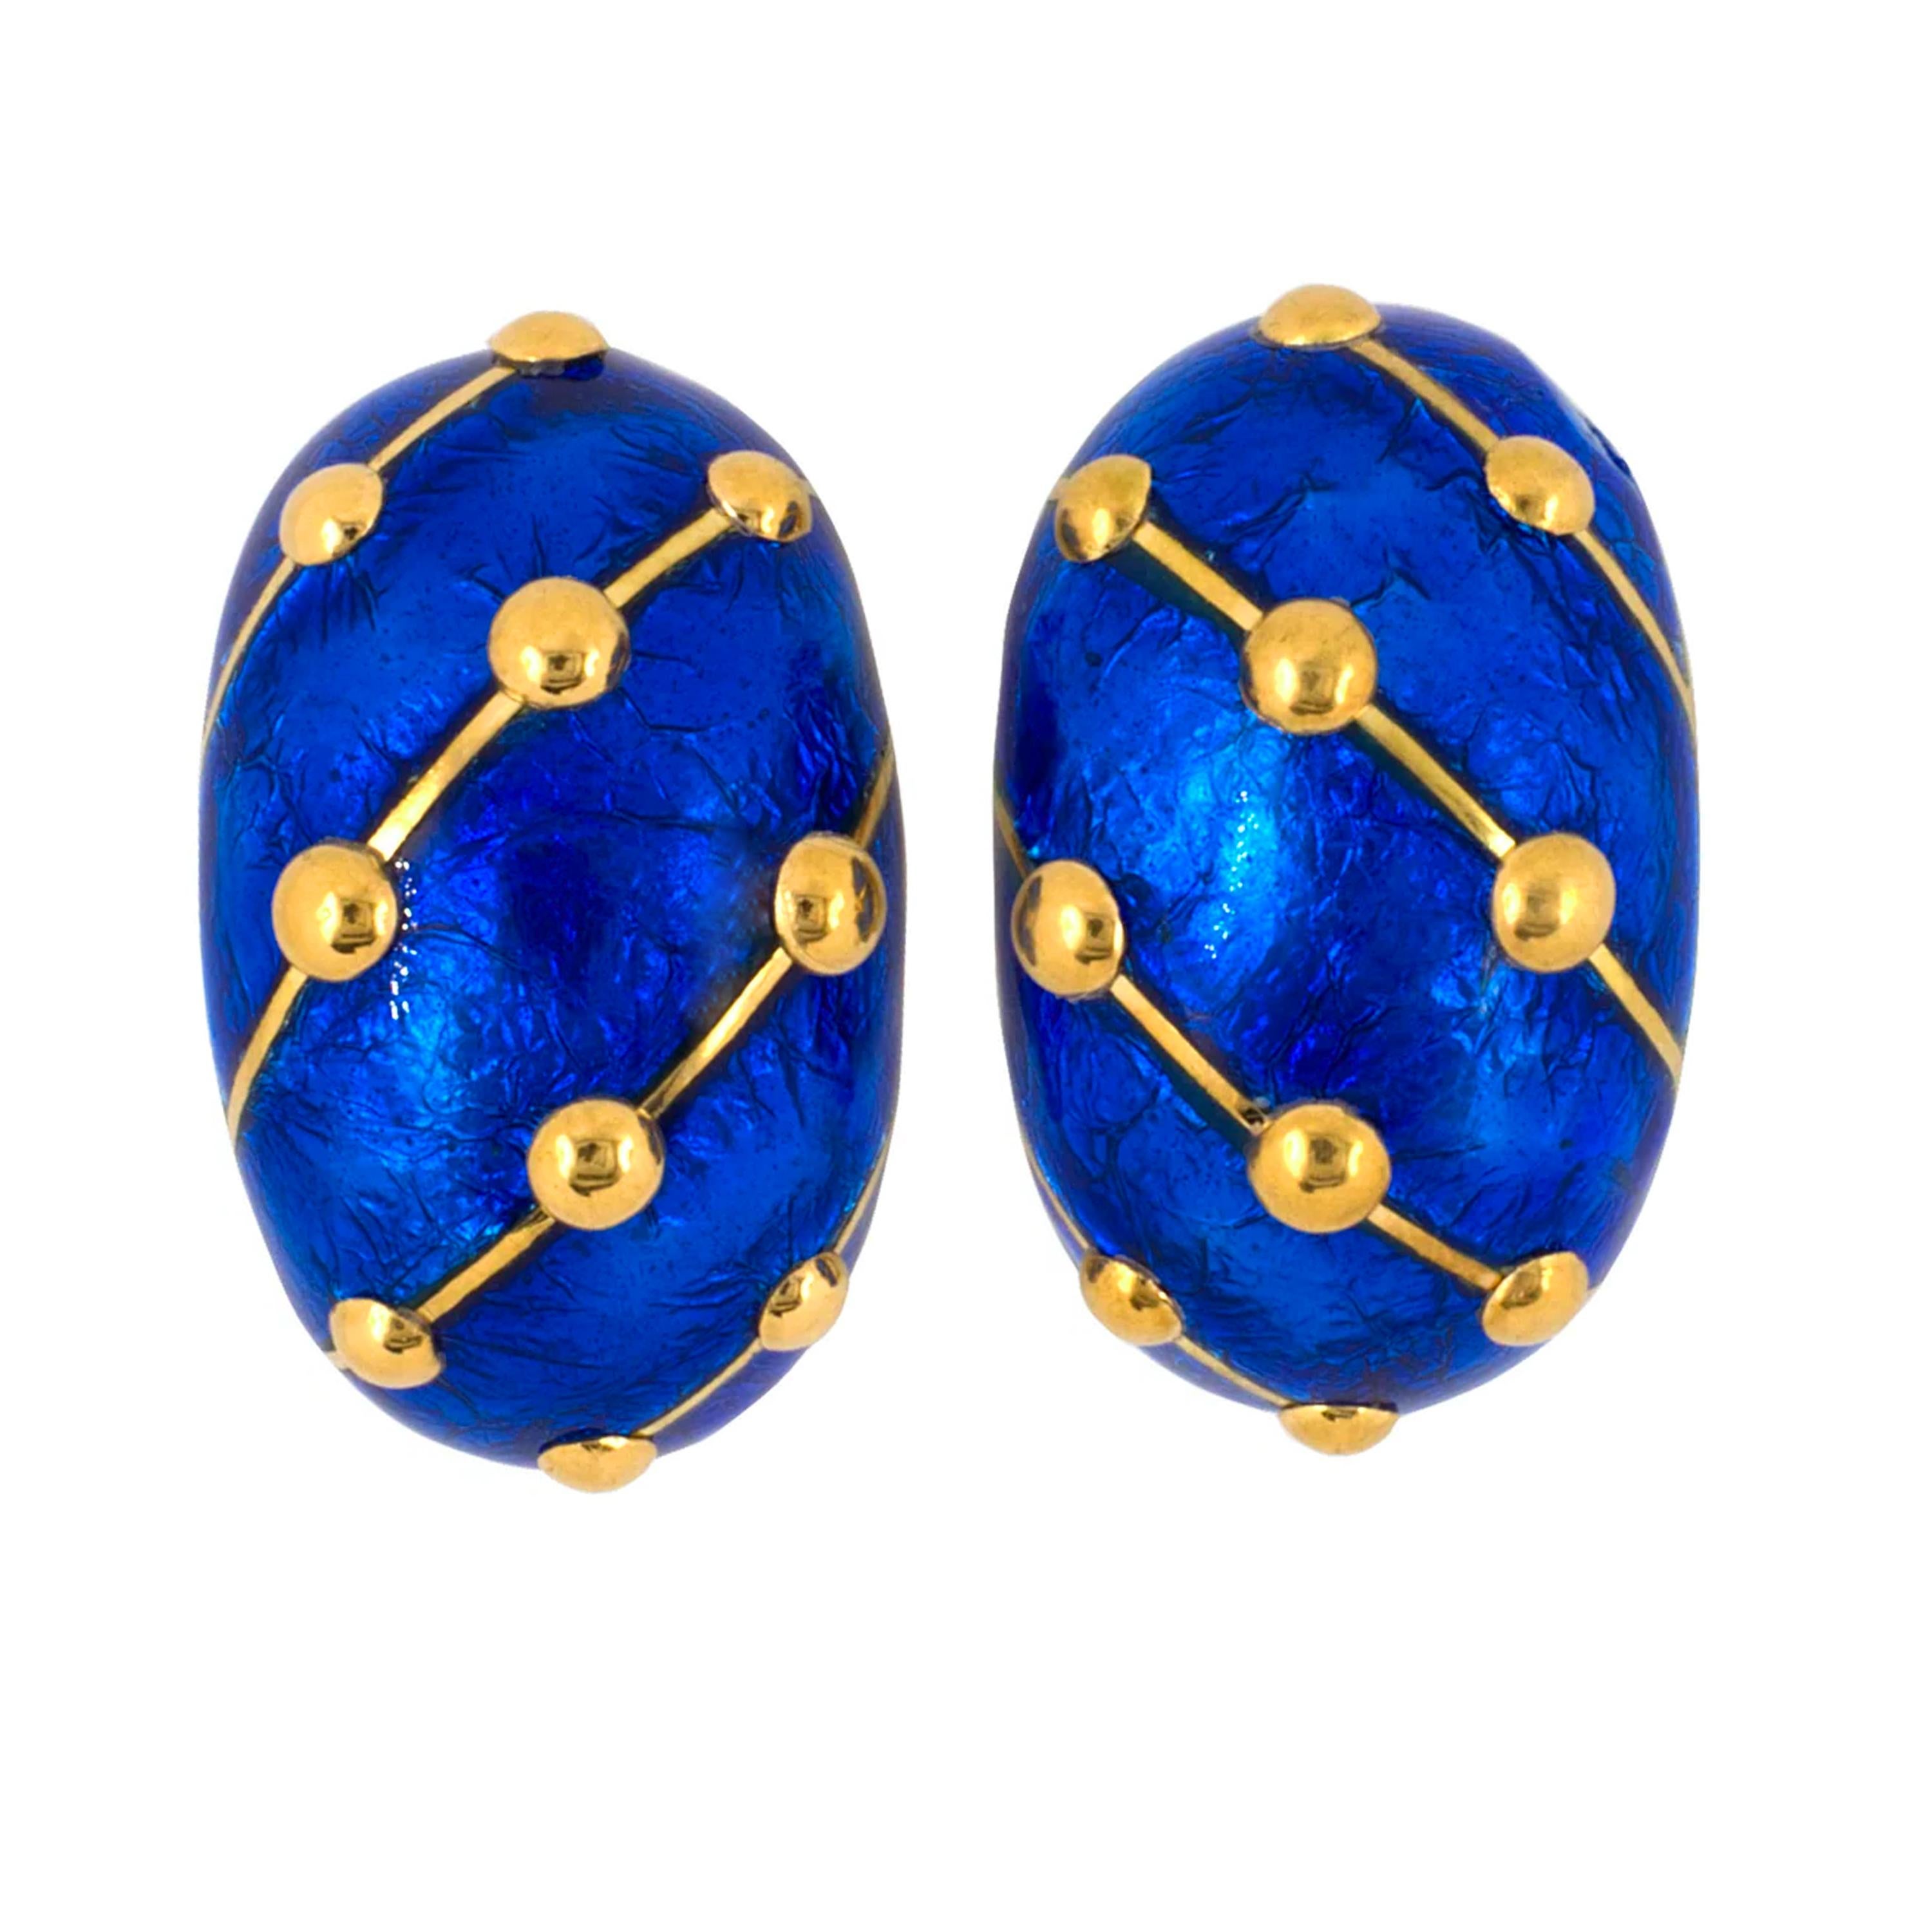 Tiffany & Co. Jean Schlumberger 18K Gold Blue Enamel Lozenge Banana Earrings In Excellent Condition For Sale In Boca Raton, FL